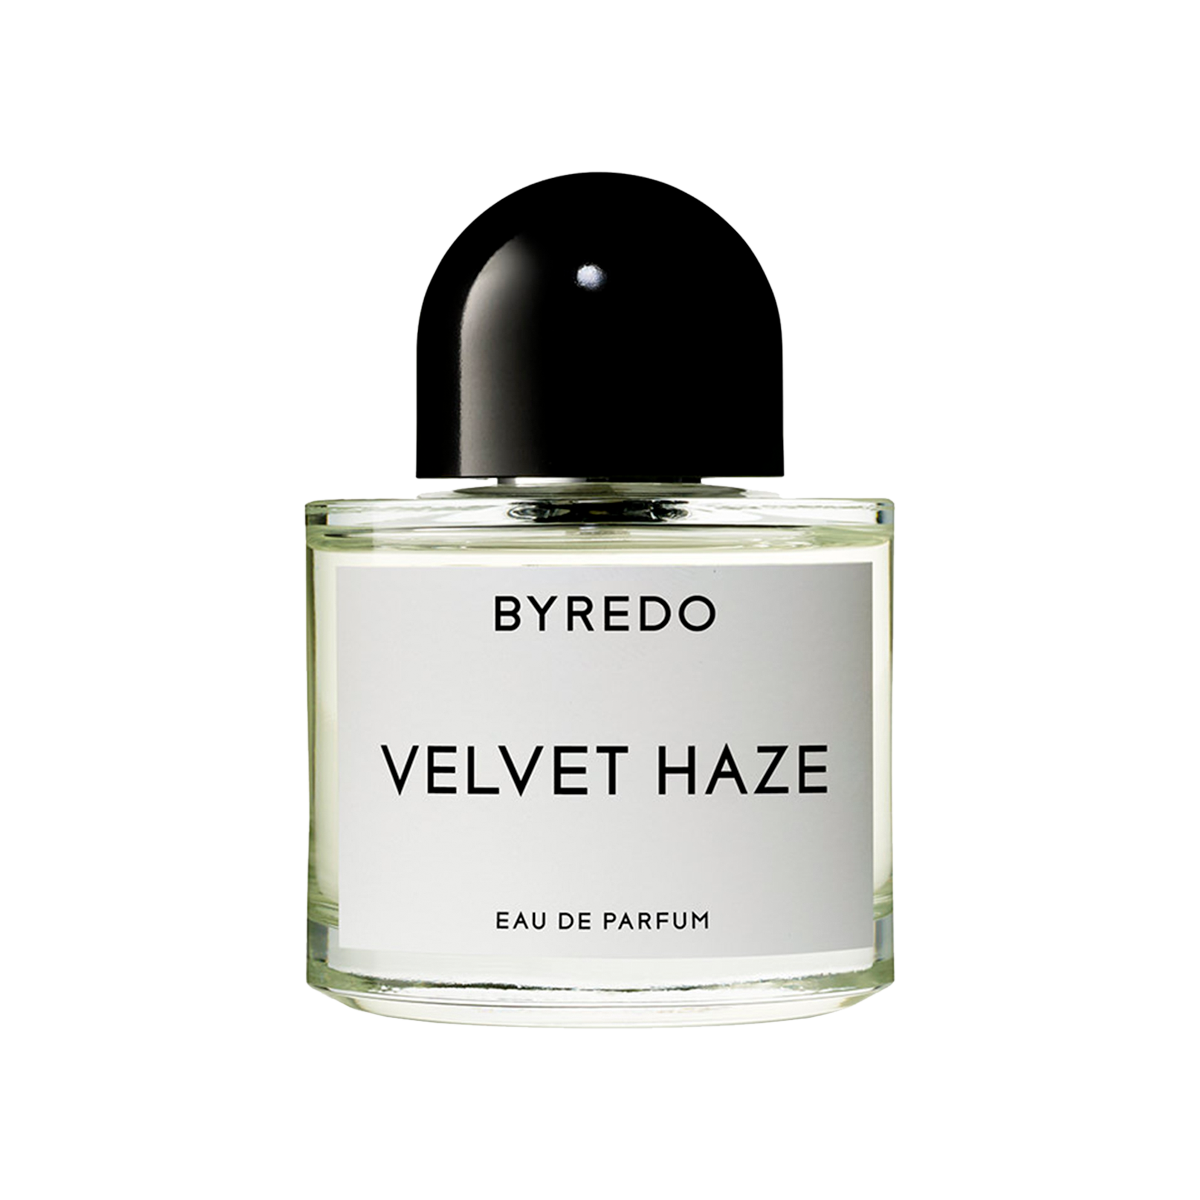 Byredo - Velvet Haze Eau de Parfum